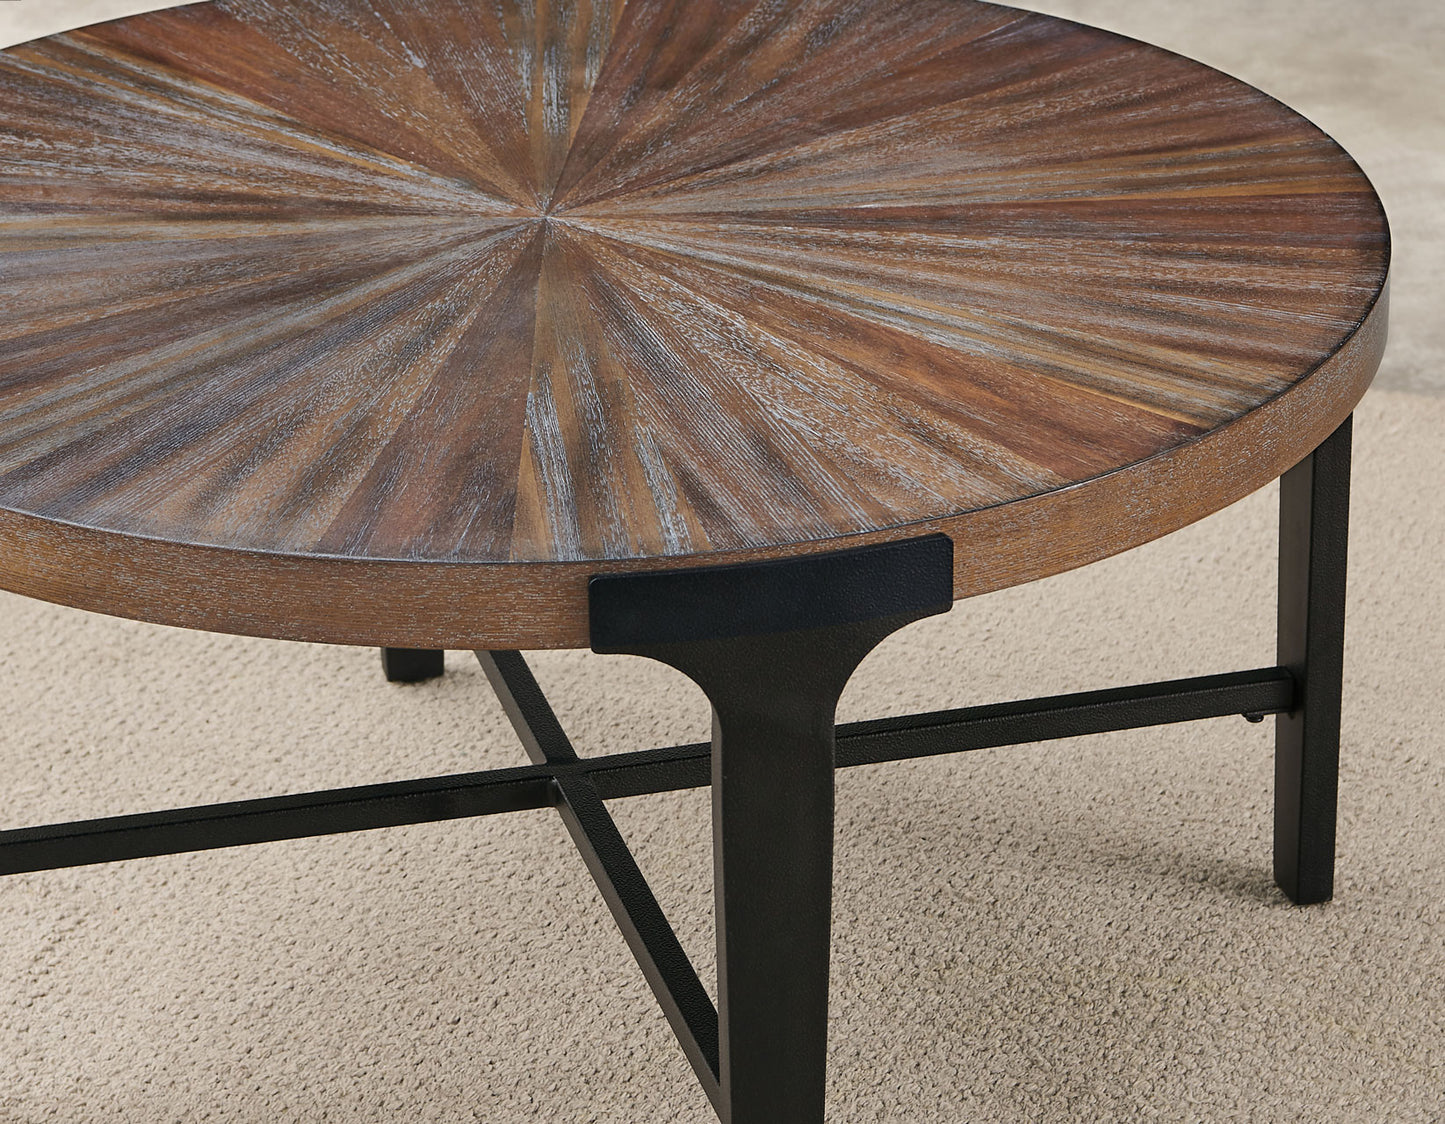 Chevron 36-inch Round Coffee Table